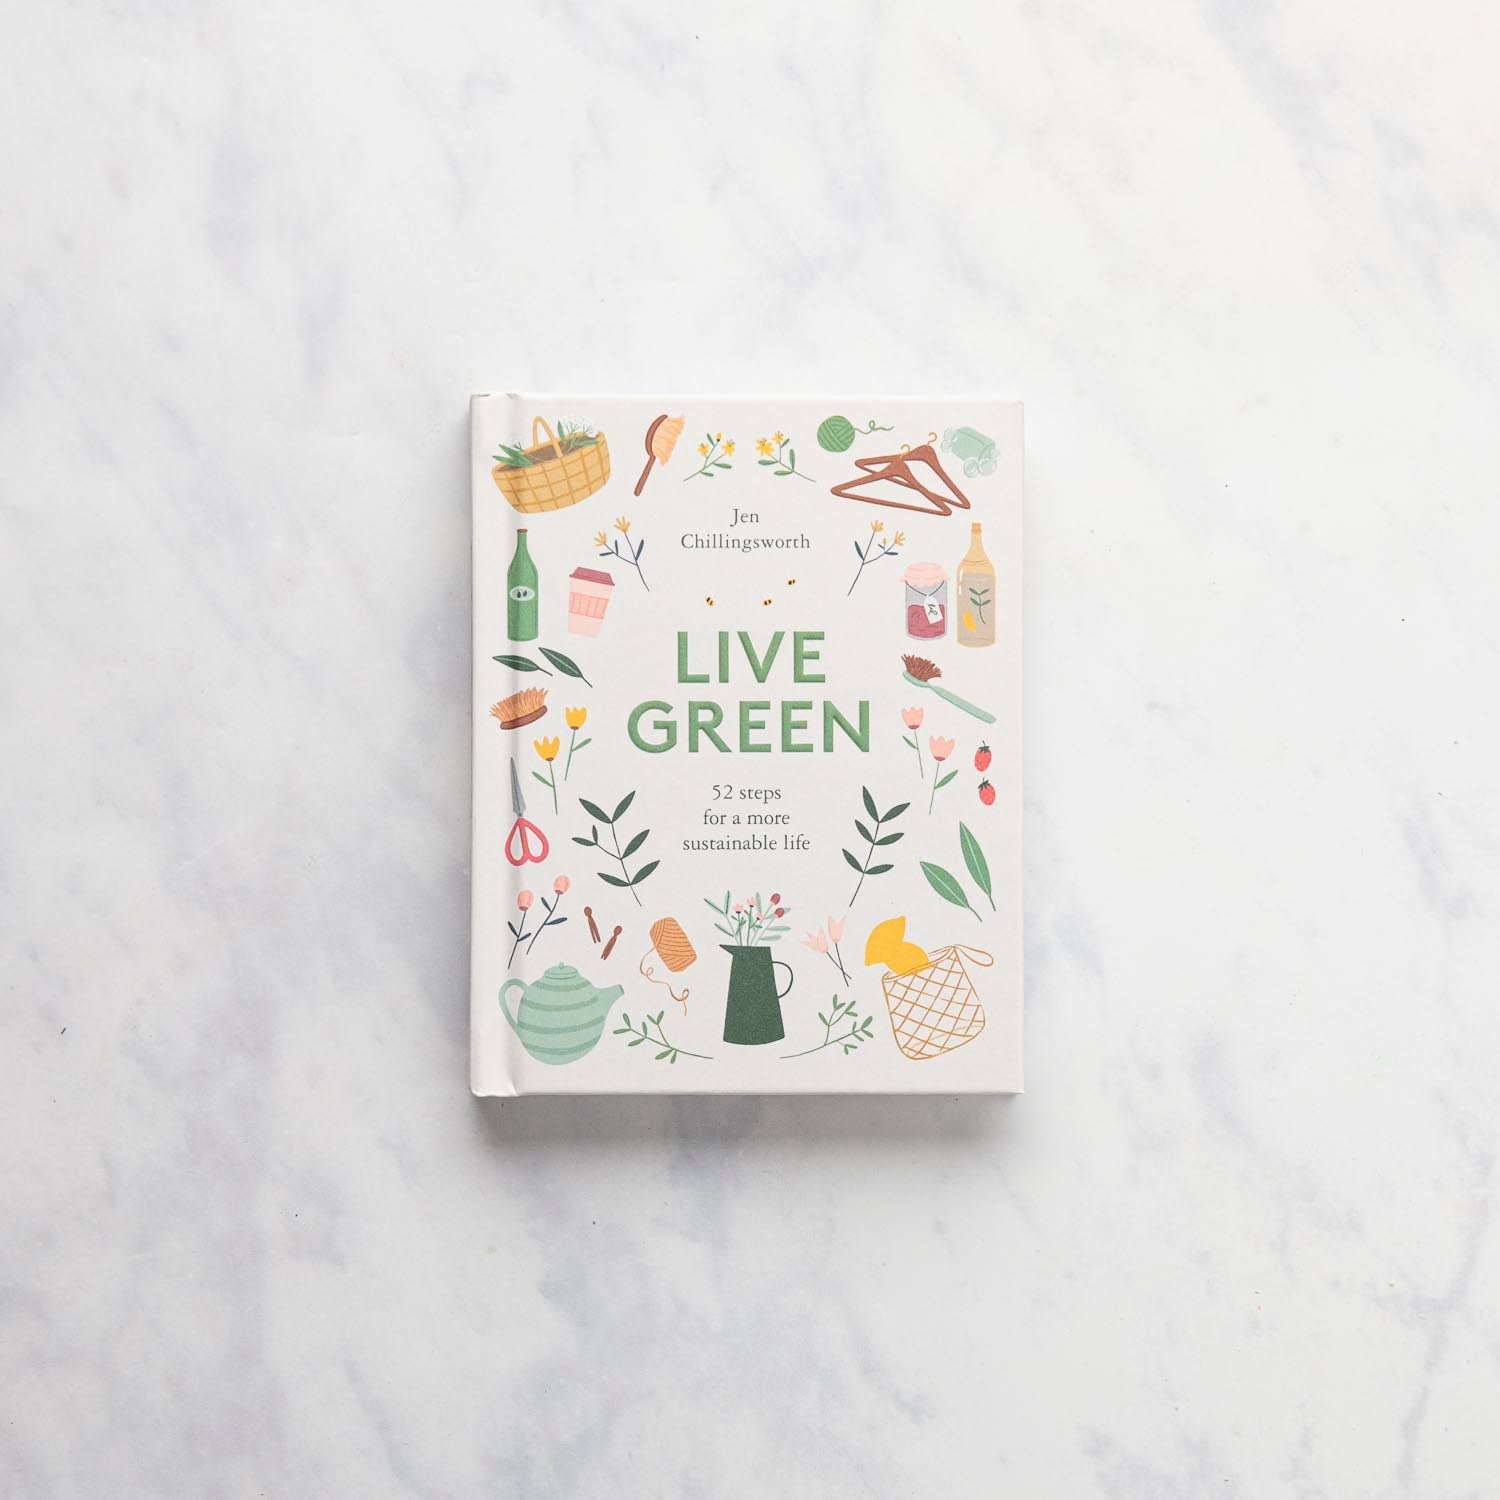 LIVE GREEN BOOK